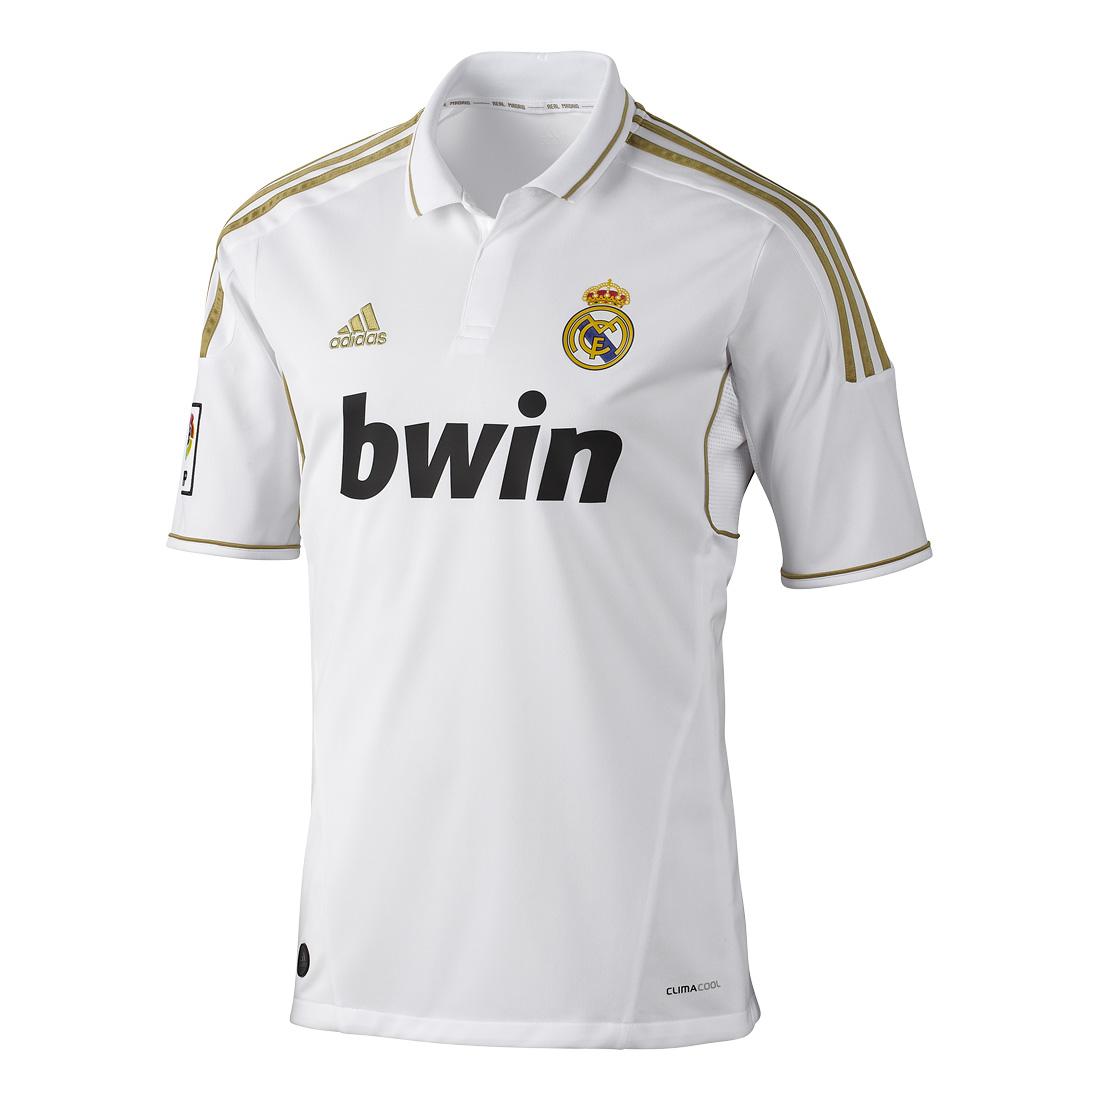 Foto Camiseta Real Madrid 2012 foto 832